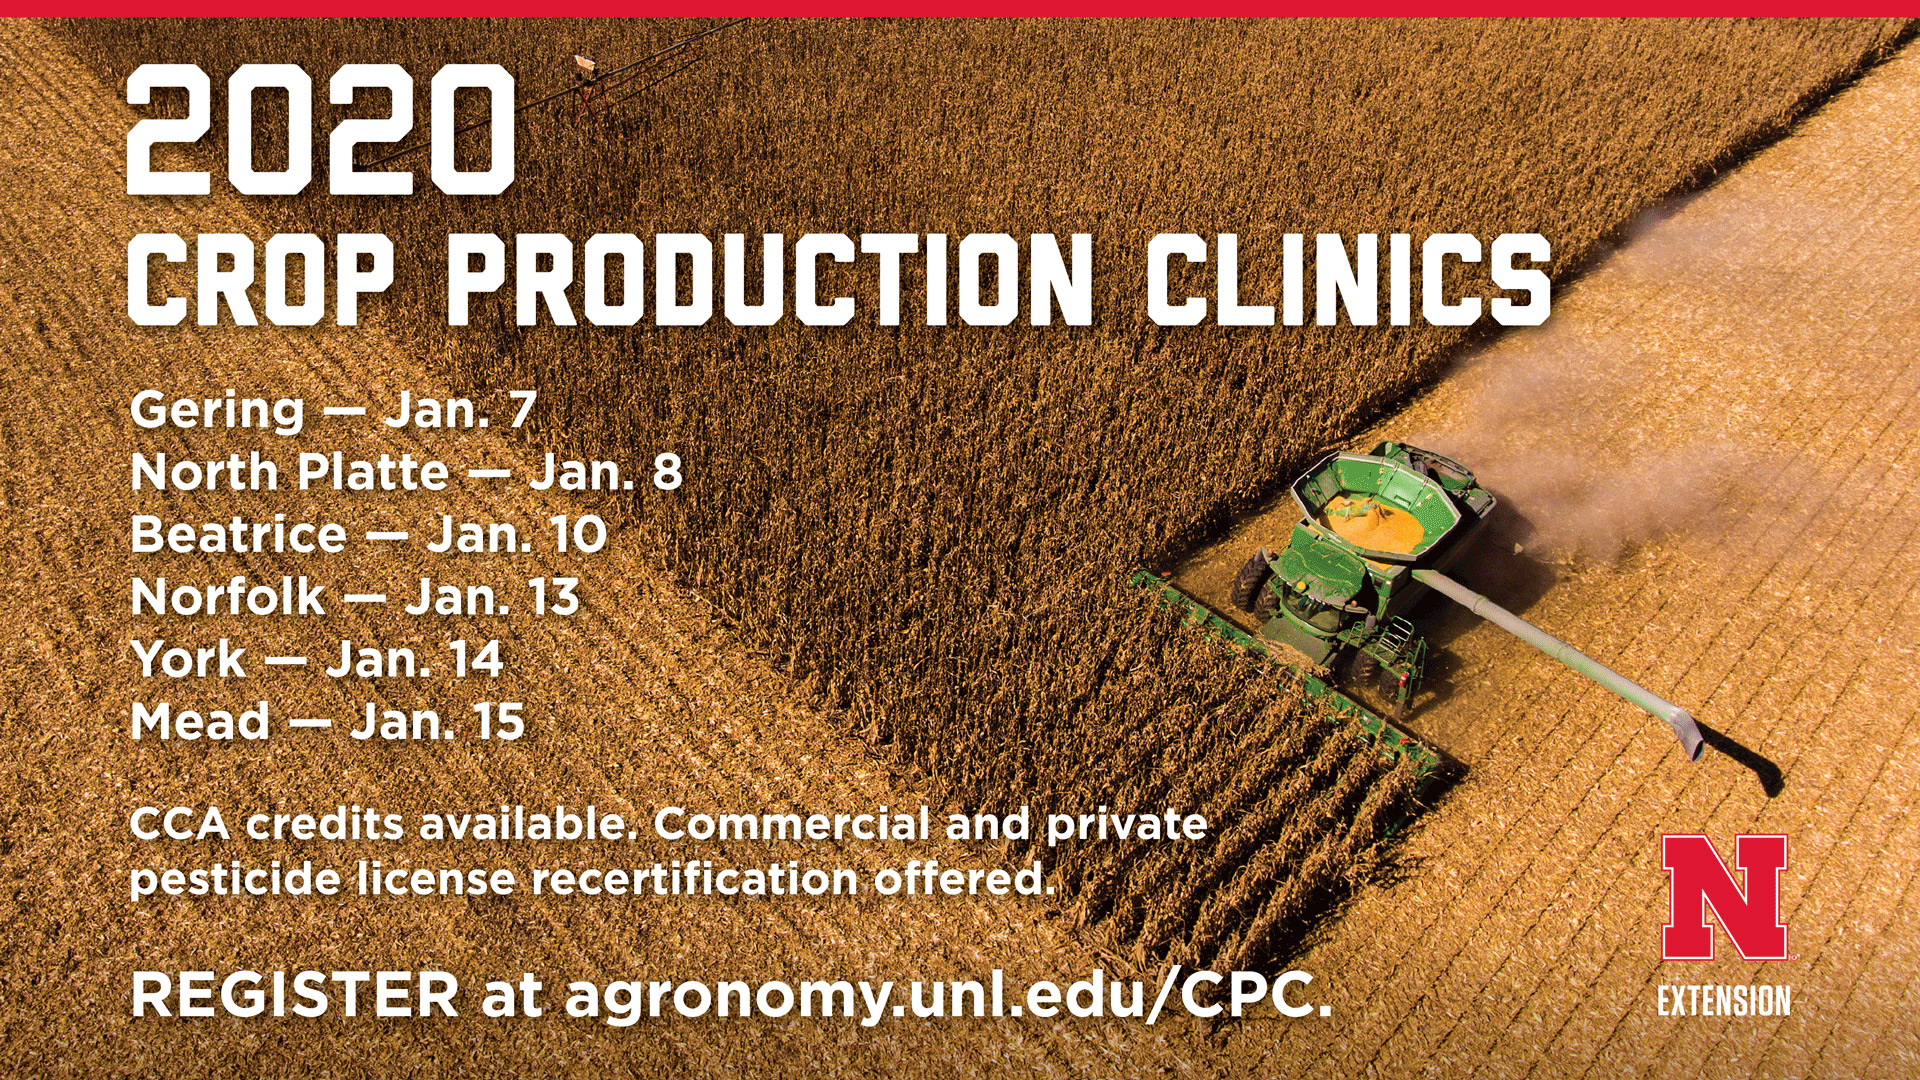 Nebraska Extension Crop Production Clinics